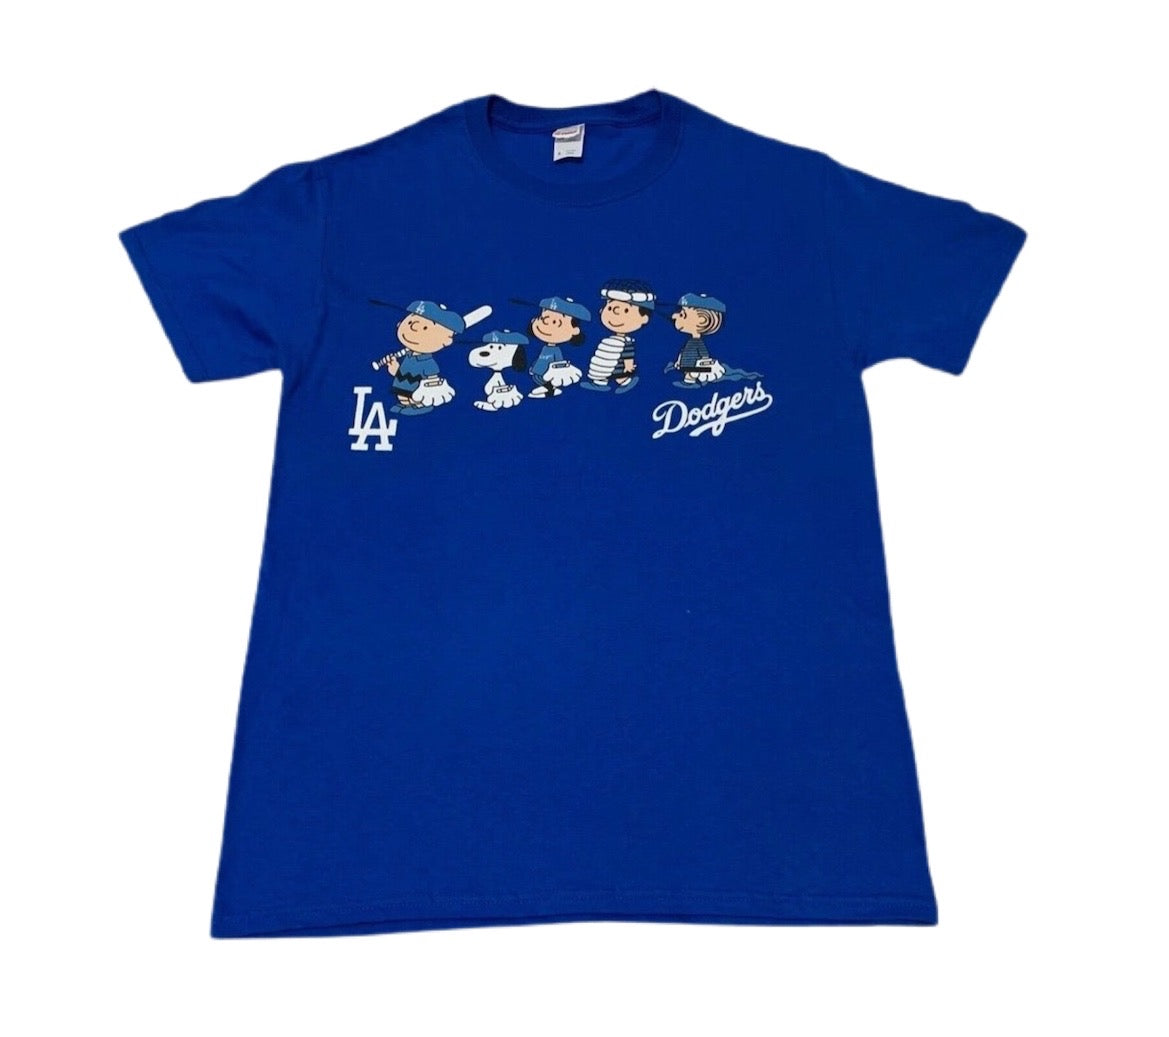 Shop Dodgers T-Shirts - Only at LA Rags & Dyes